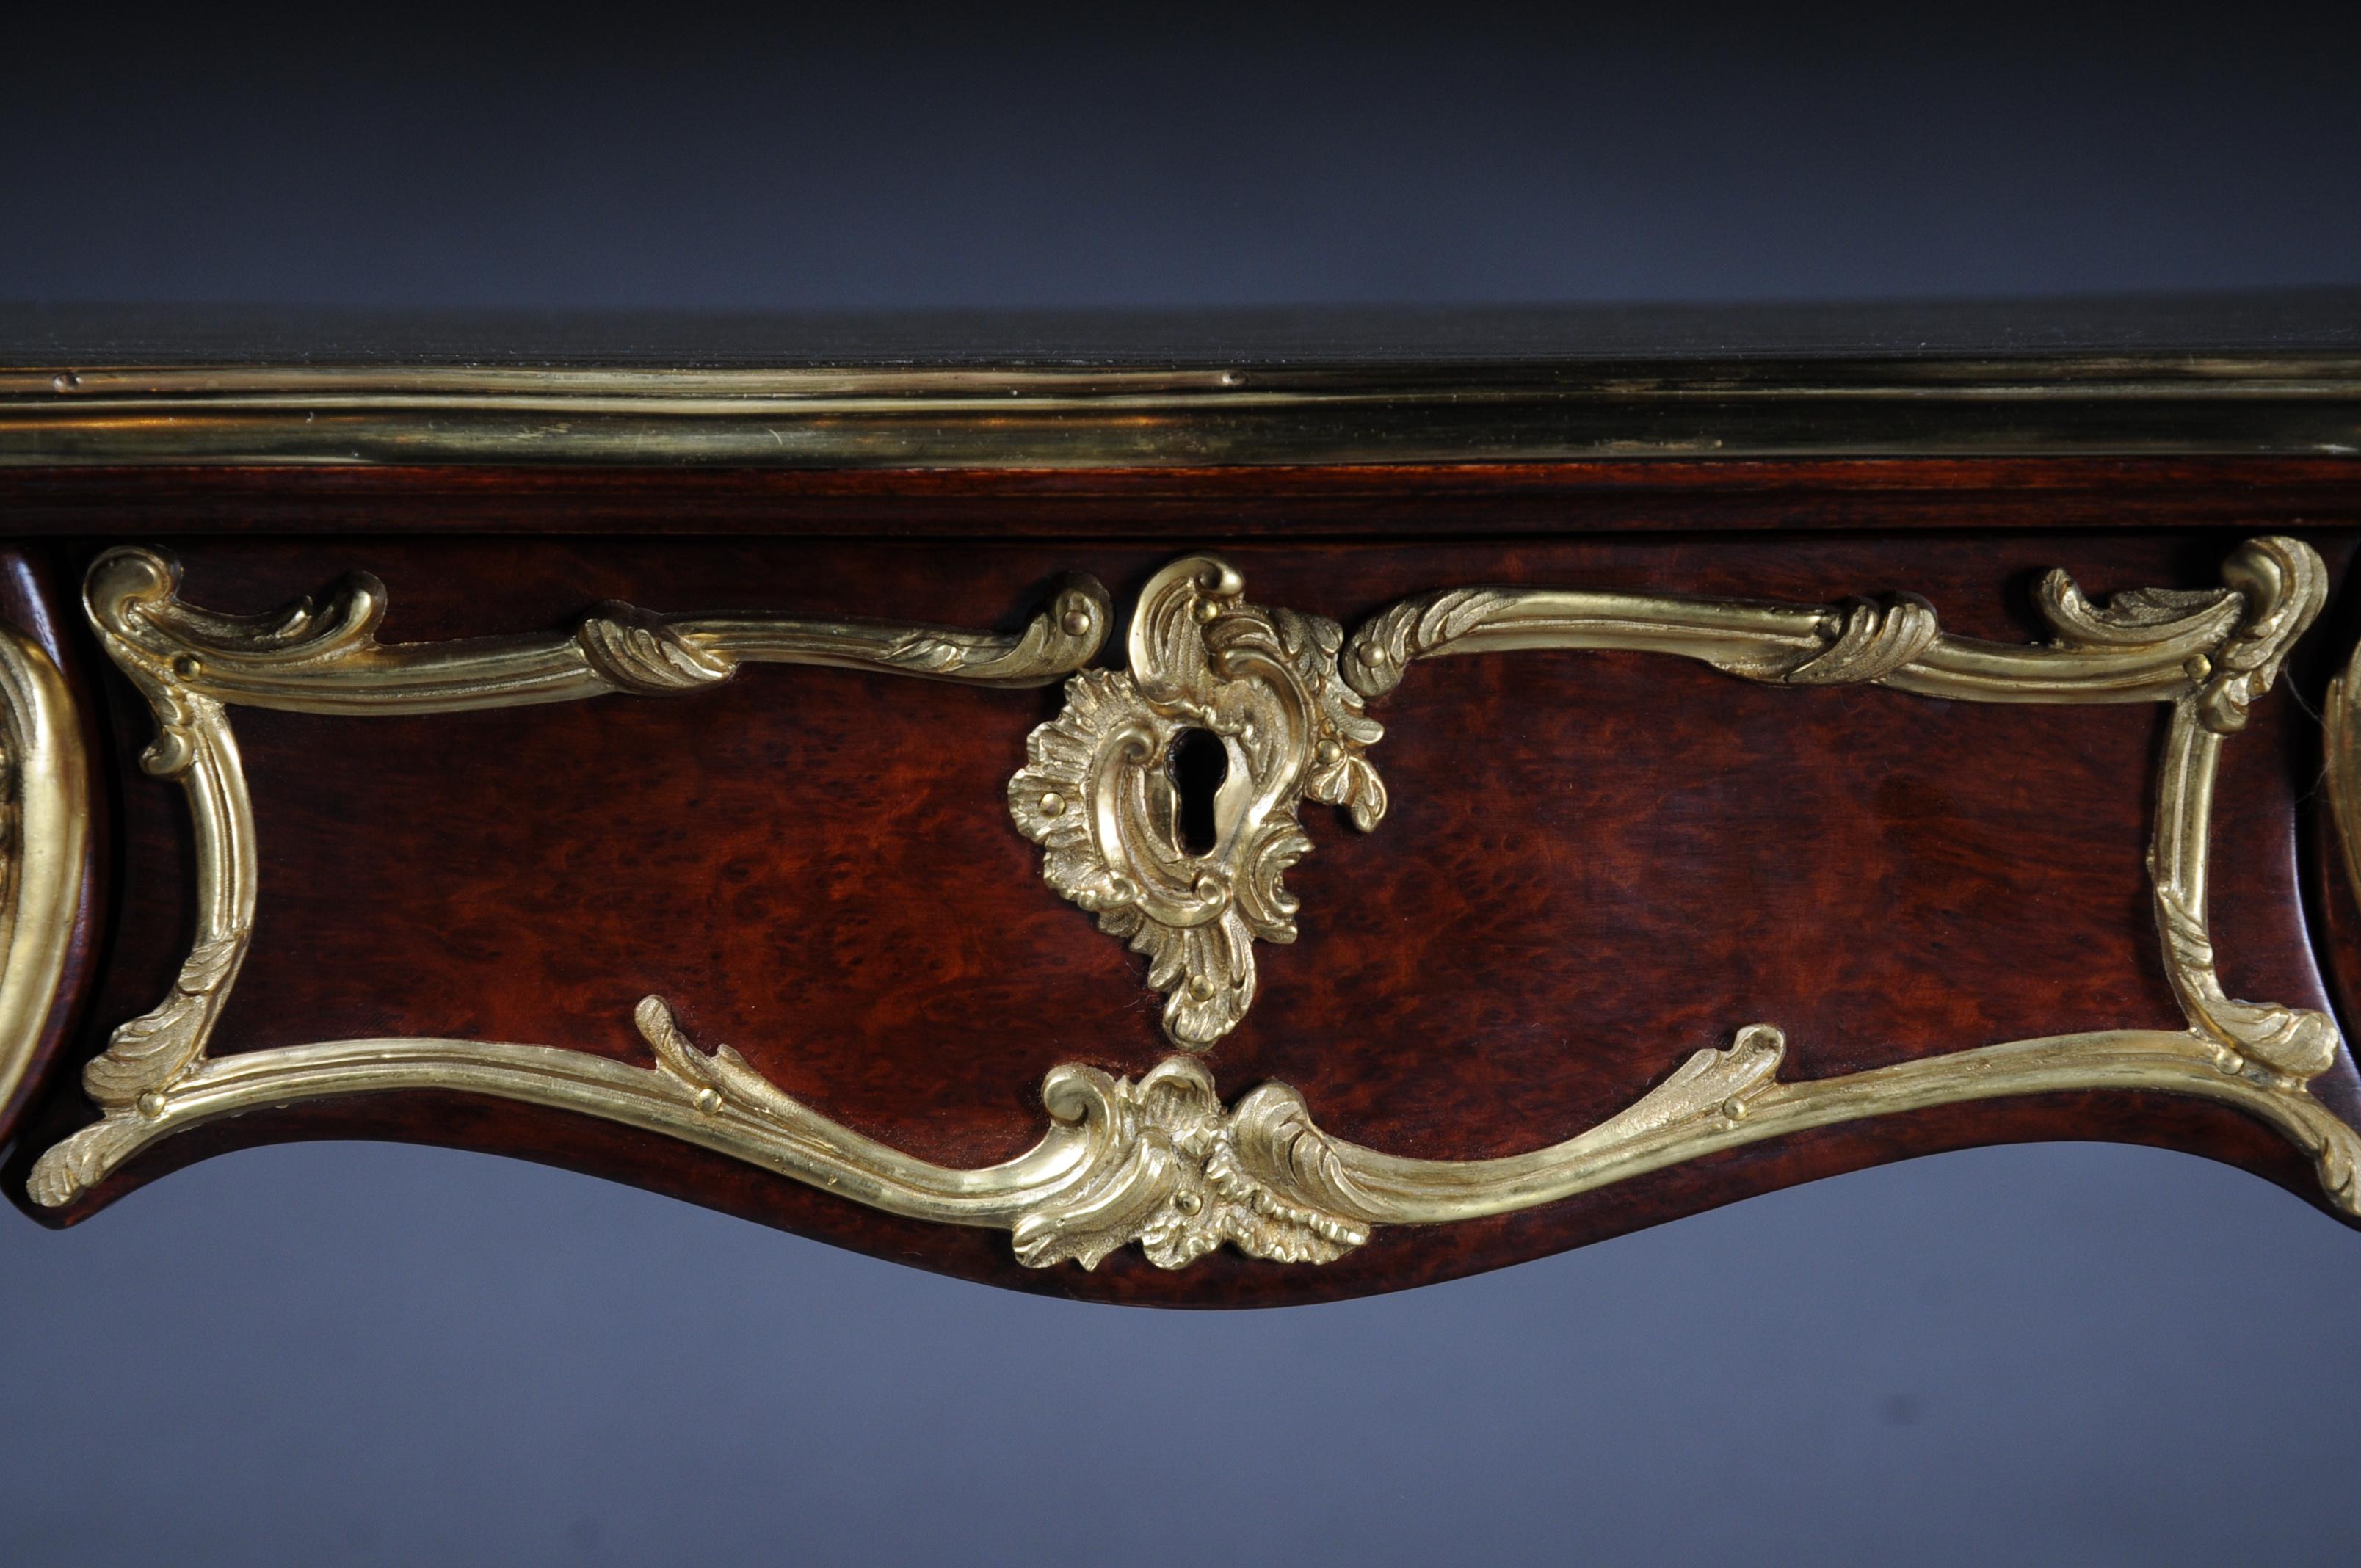 20th Century Elegant Veneered Bureau Plat or Writing Desk in Louis XV Style For Sale 6